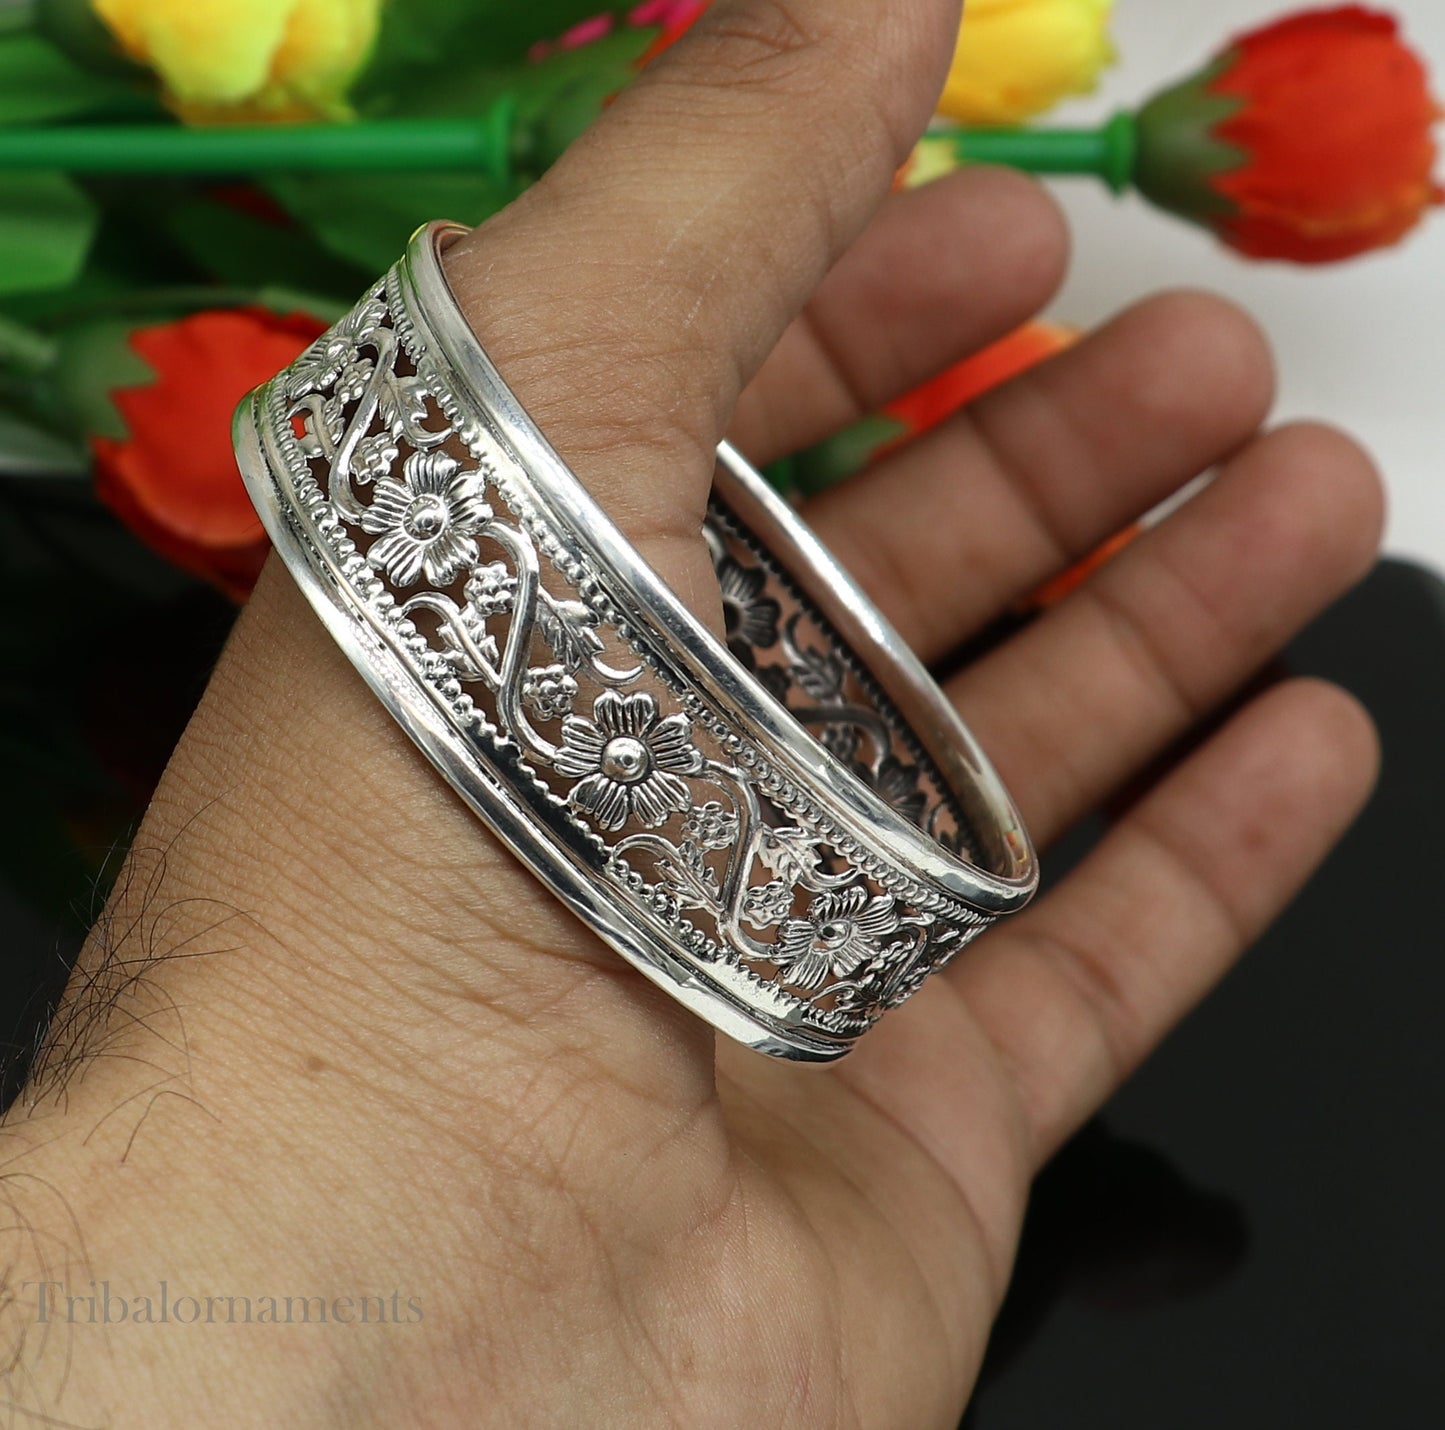 Floral style 925 sterling silver amazing customized bangle bracelet kada , best brides gifting ethnic stylish tribal jewelry ba118 - TRIBAL ORNAMENTS